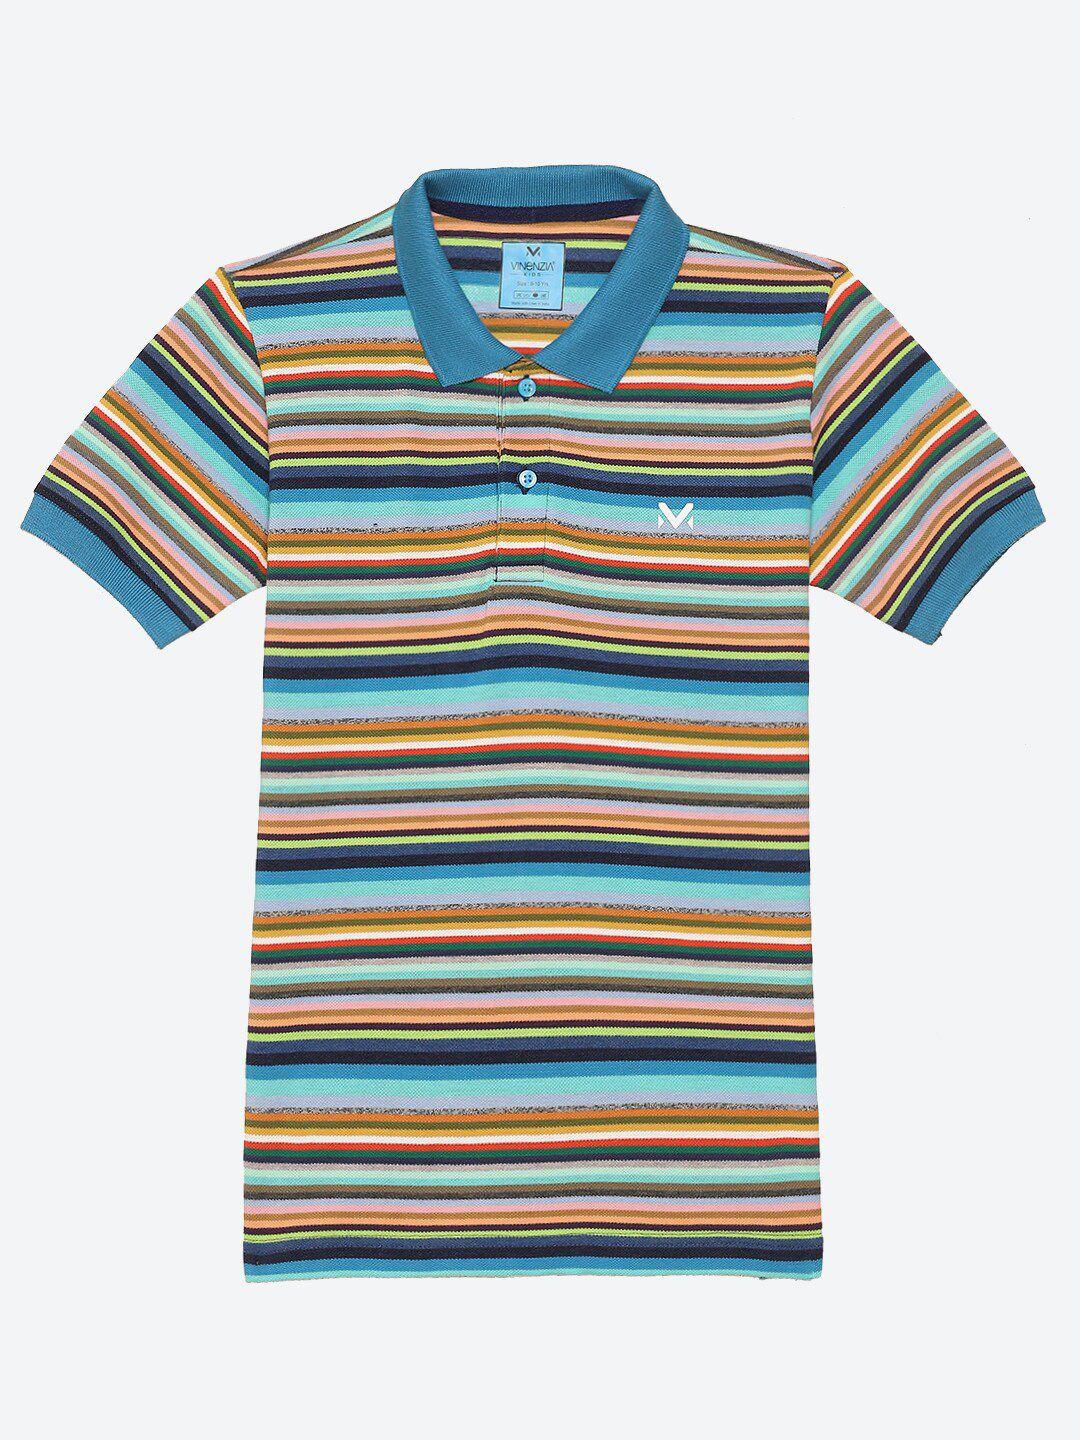 vinenzia-boys-blue-striped-t-shirt